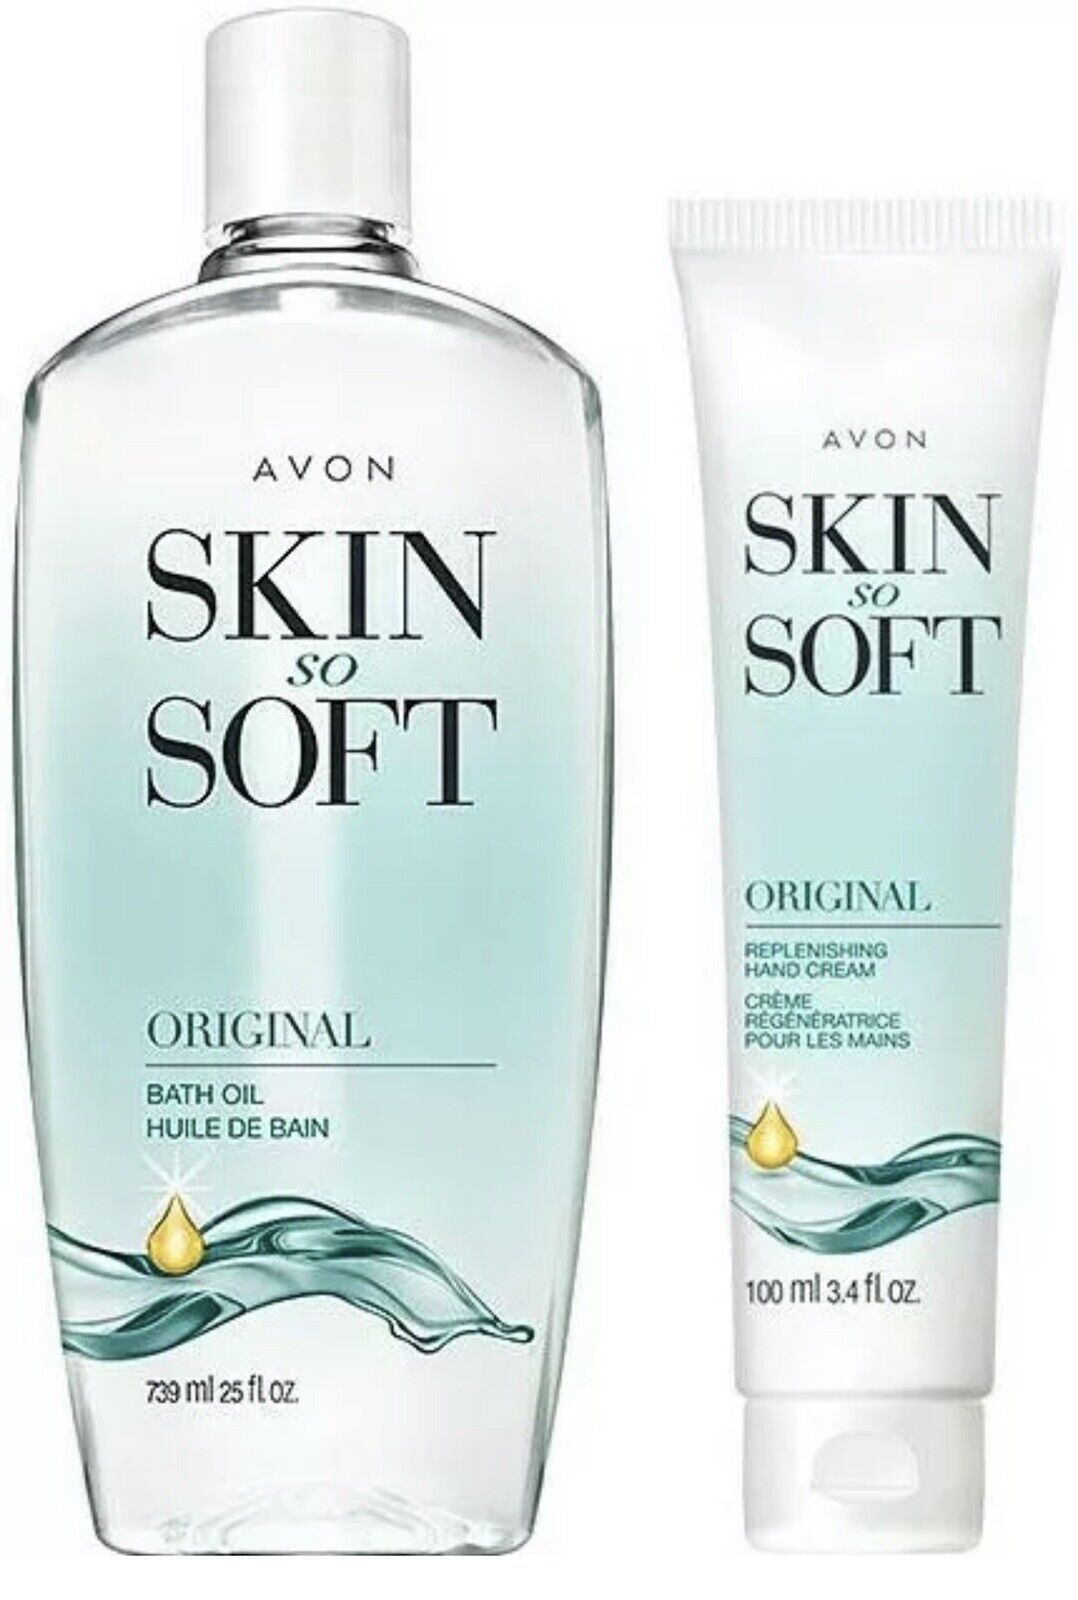 Avon Skin So Soft Bath Oil Original Scent BONUS Size 25 oz Free Hand Cream